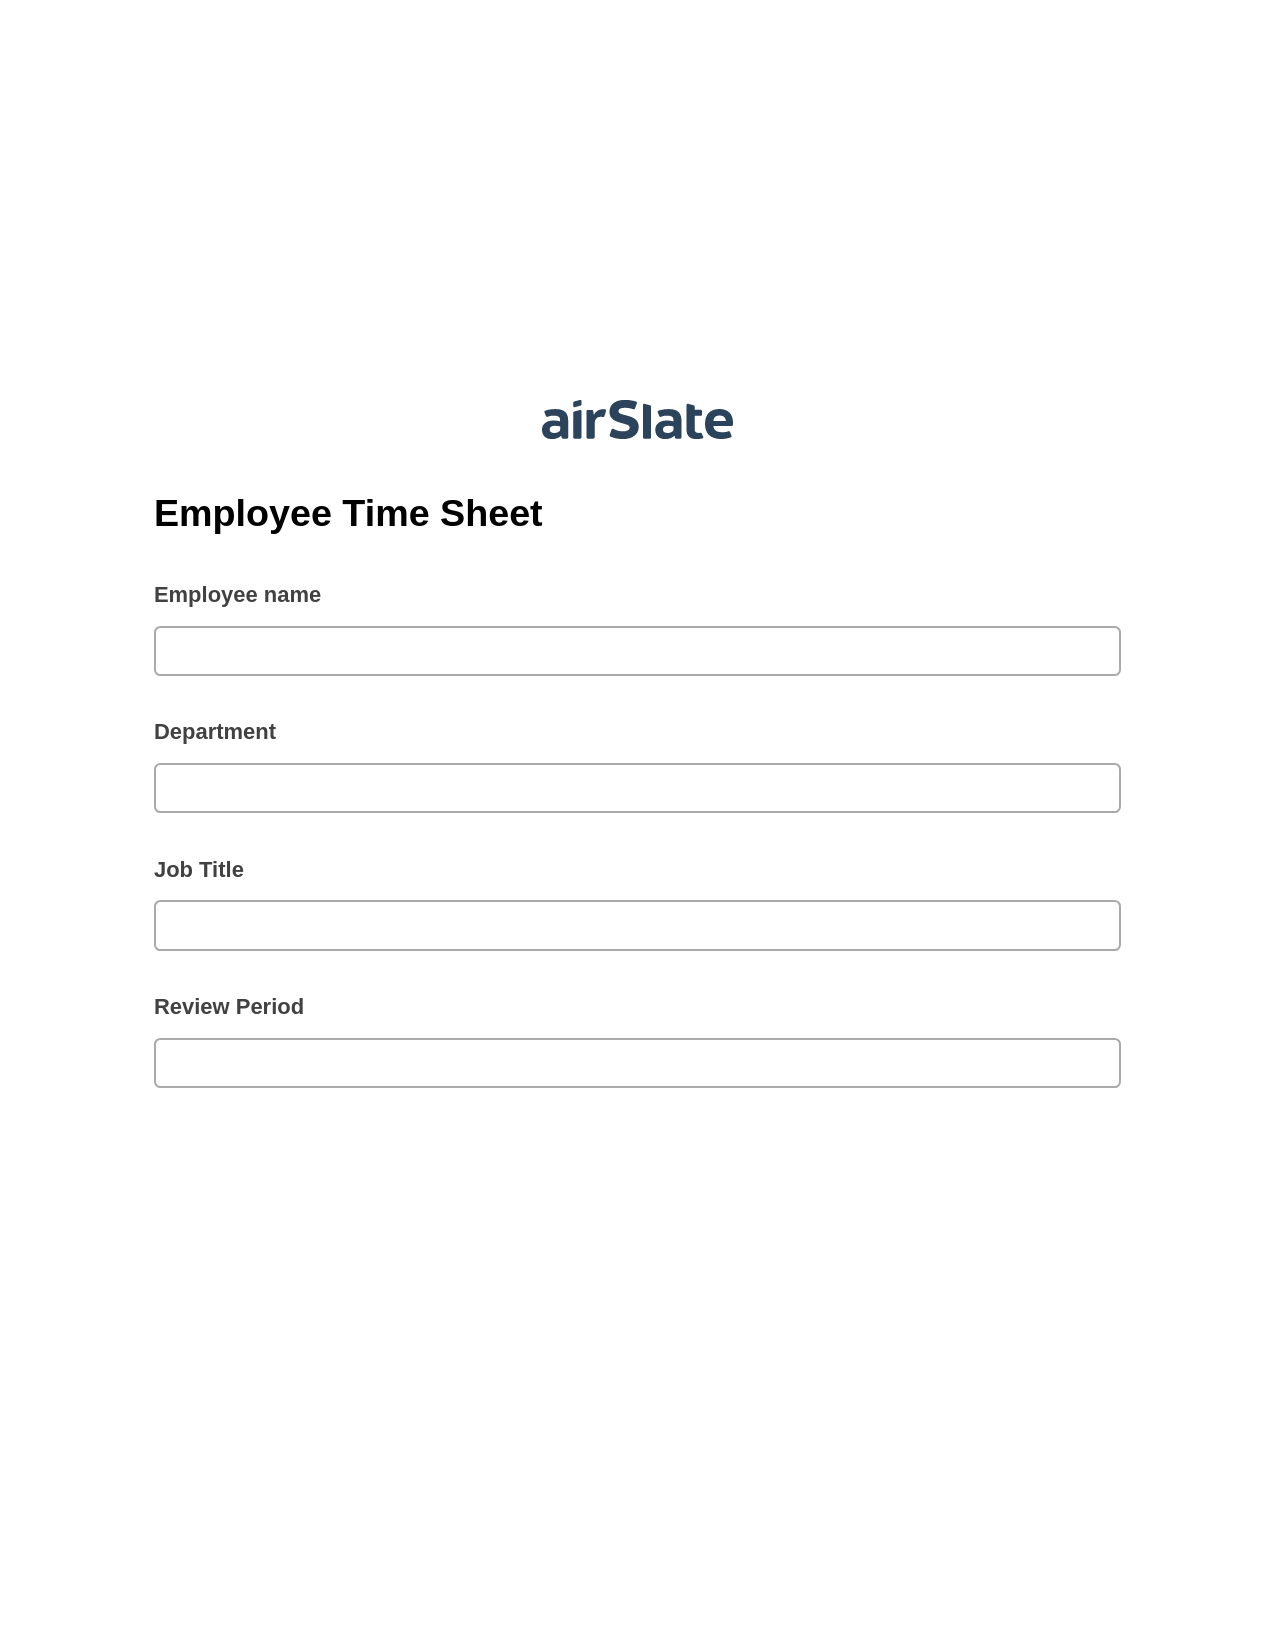 Employee Time Sheet Pre-fill from Salesforce Records Bot, Update Audit Trail Bot, Slack Notification Postfinish Bot